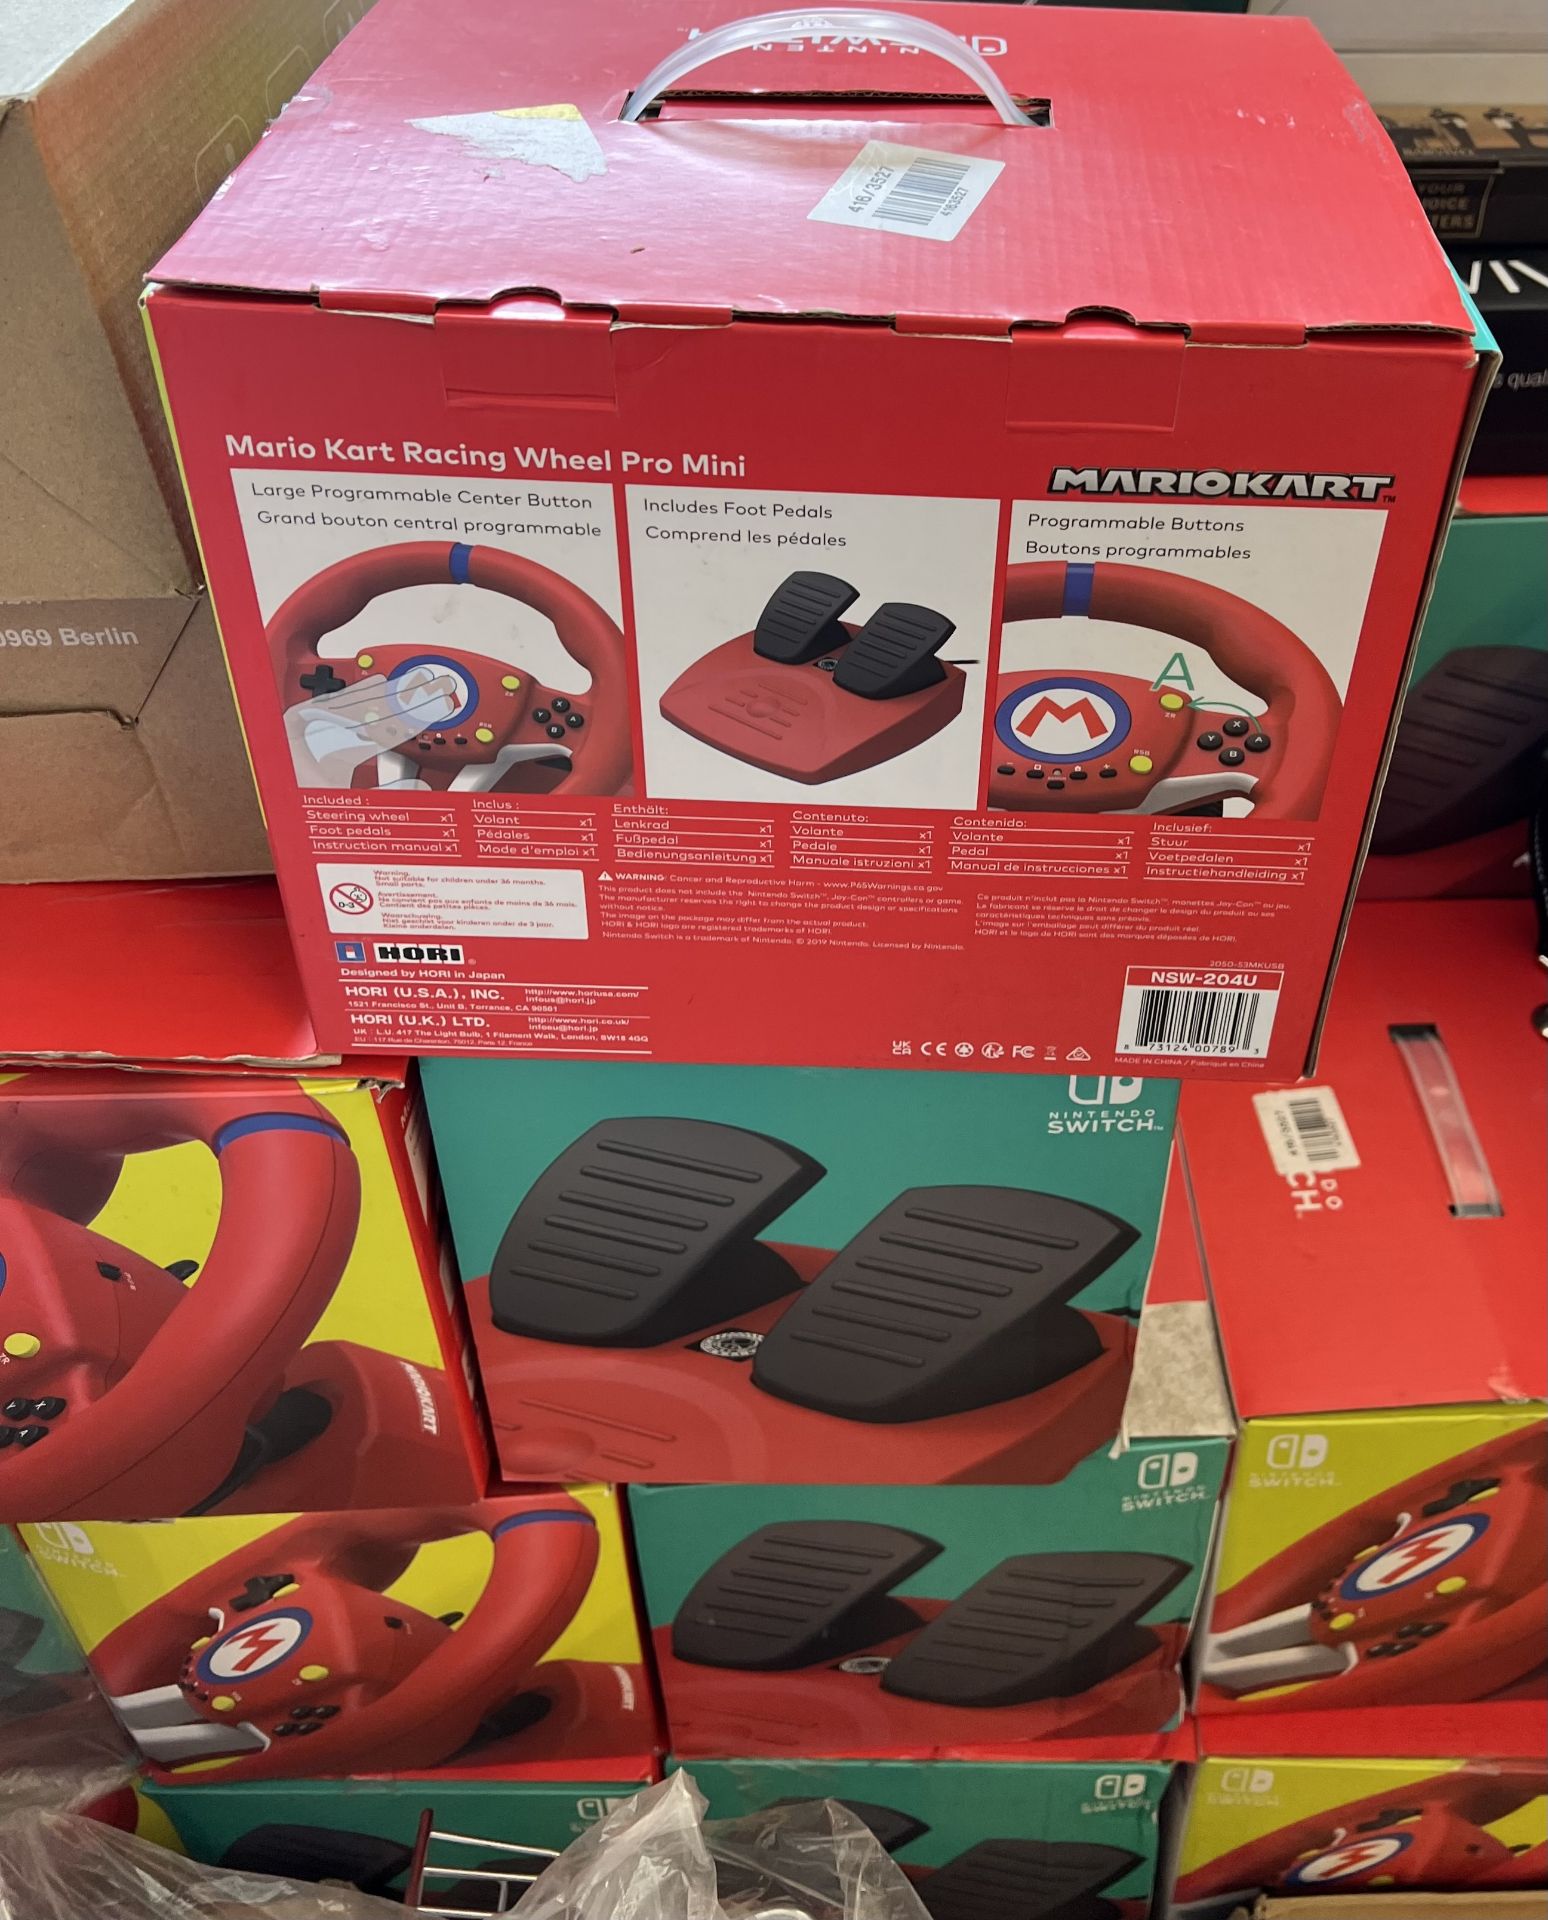 RAW RETURN - 10 x HORI Mario Kart Racing Wheel Pro Mini for Nintendo Switch - RRP NEW WOULD BE £650! - Image 5 of 9